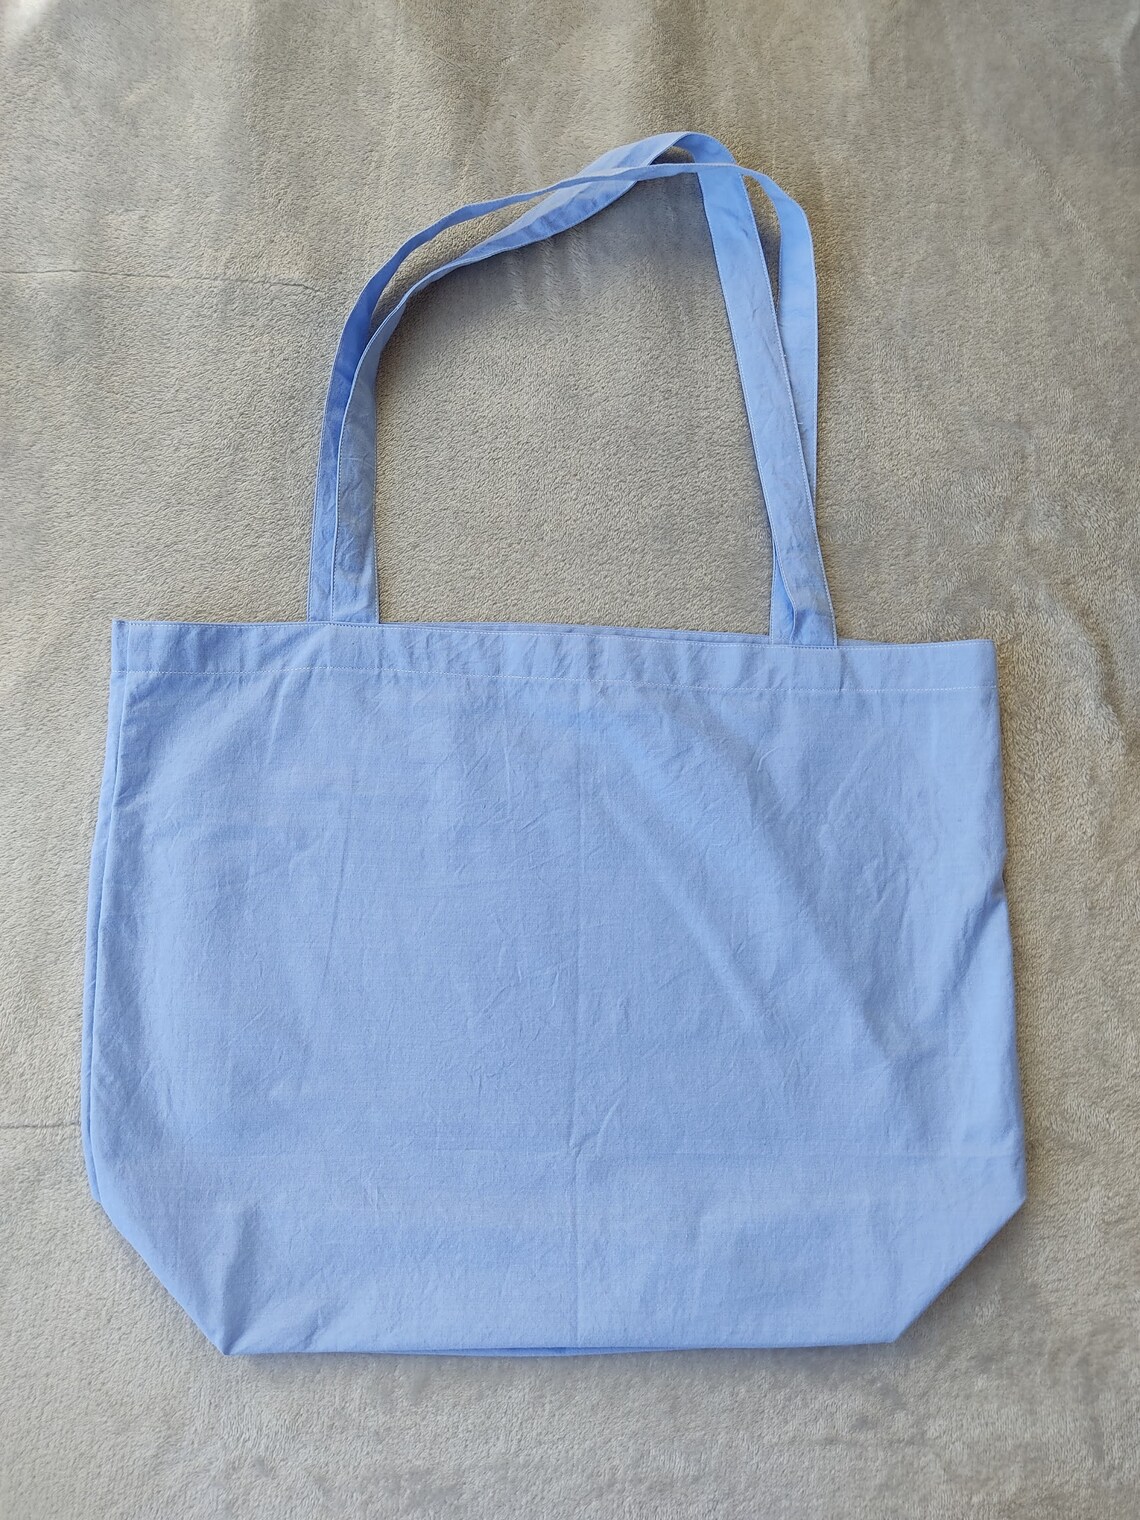 Tote bag light blue | Etsy